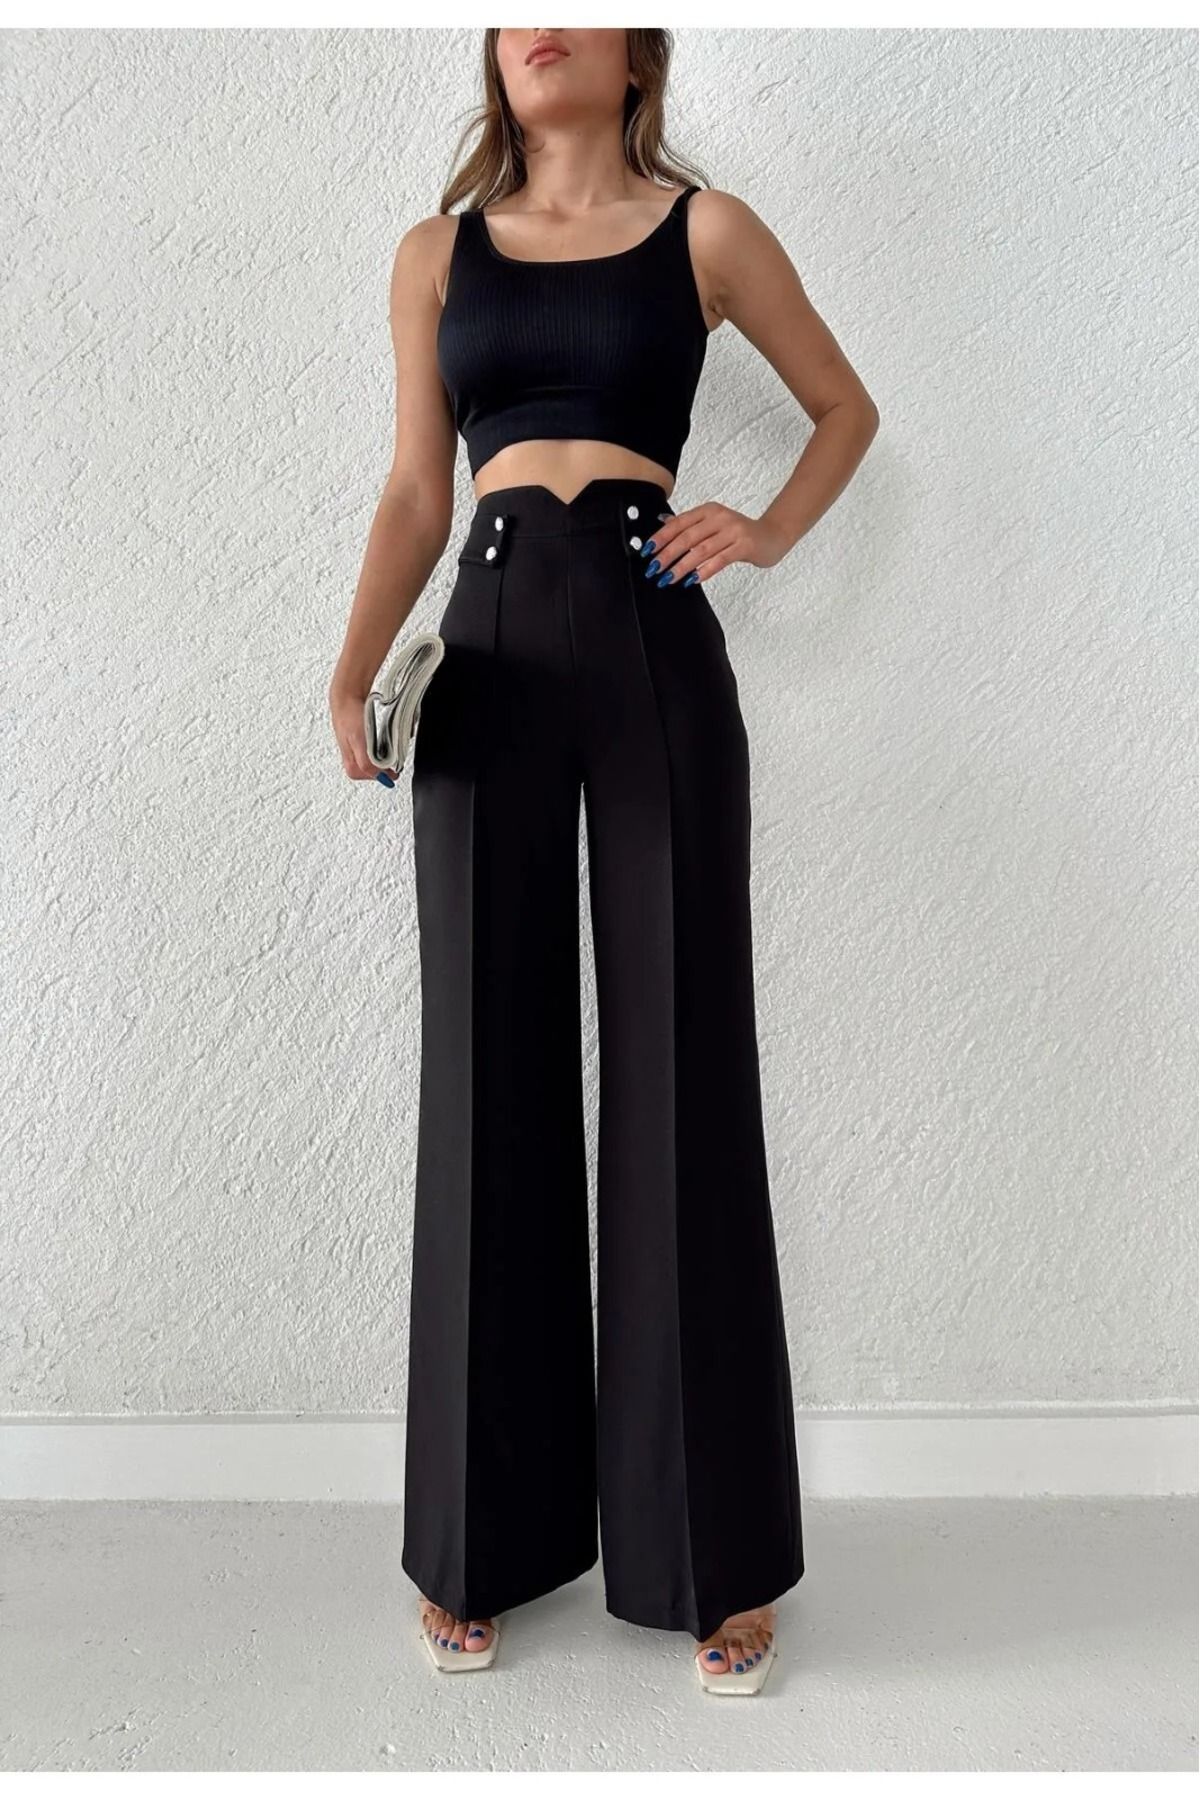 H&A İSTANBUL Kadın Yüksek Bel Palazzo Düğmeli Detay Slim Fit Kalip Pantolon